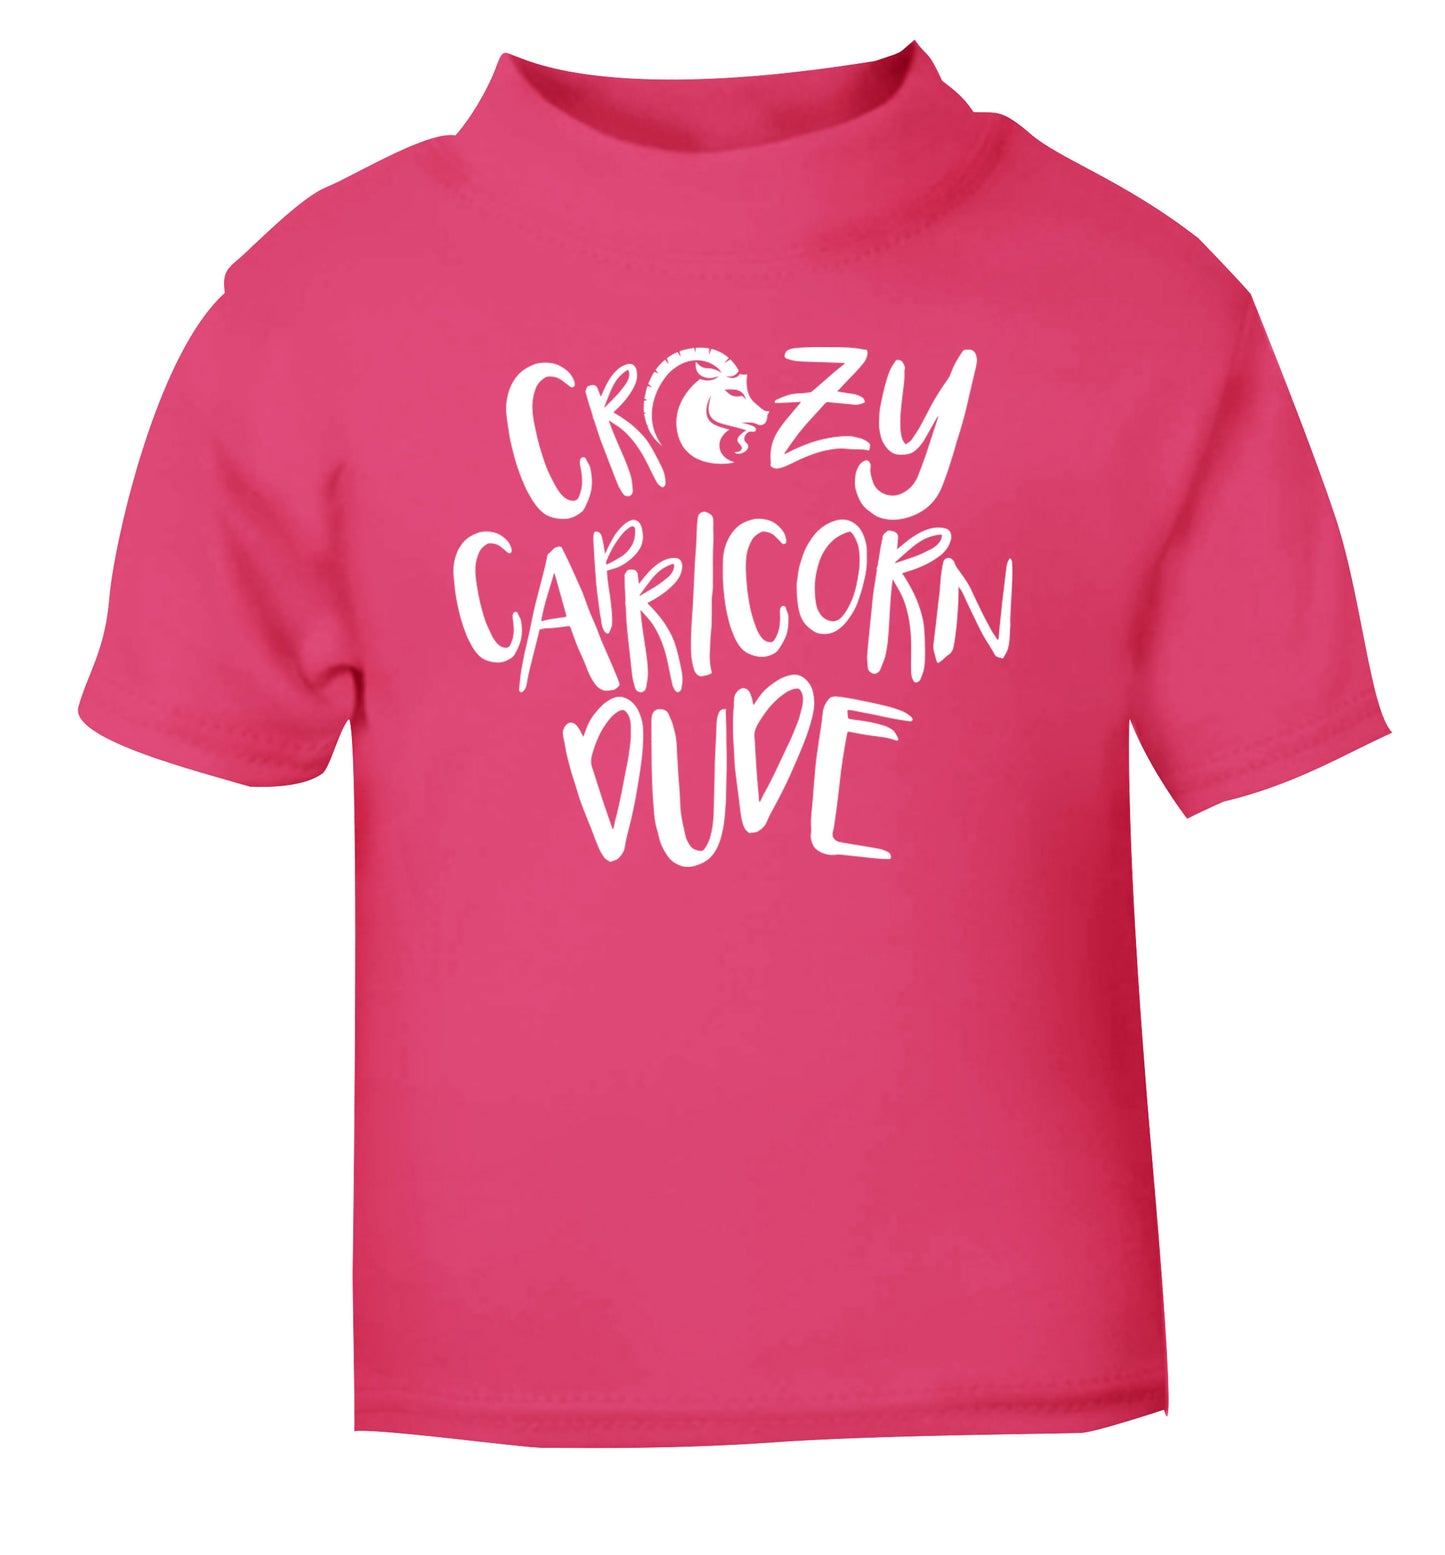 Crazy capricorn dude pink Baby Toddler Tshirt 2 Years